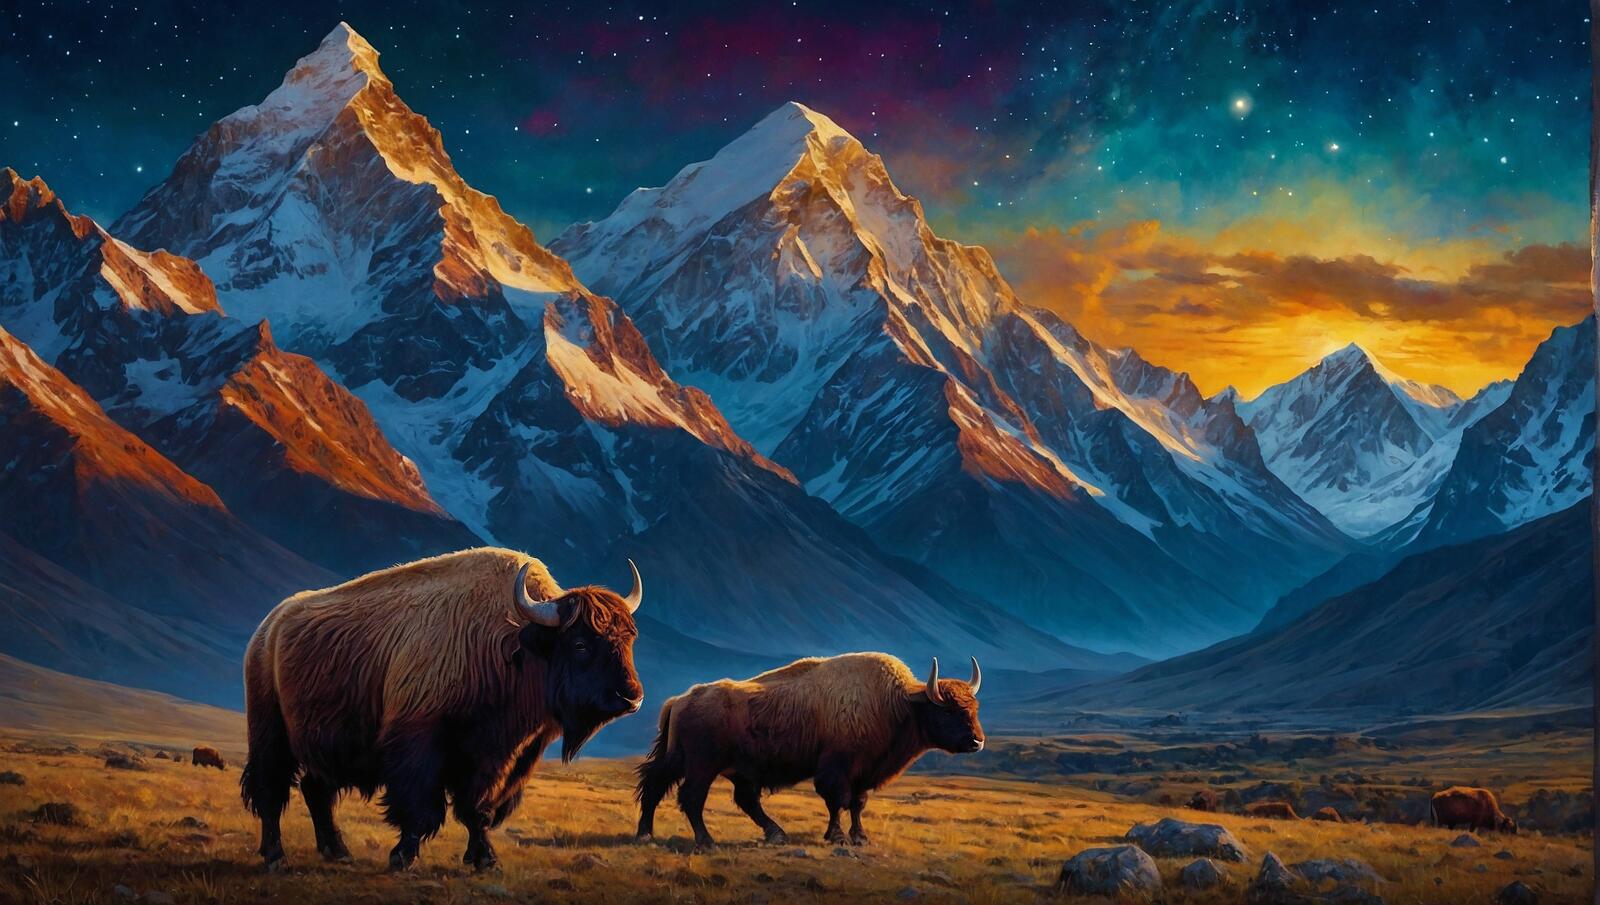 Бесплатное фото Два бизона на фоне гор в лучах заката